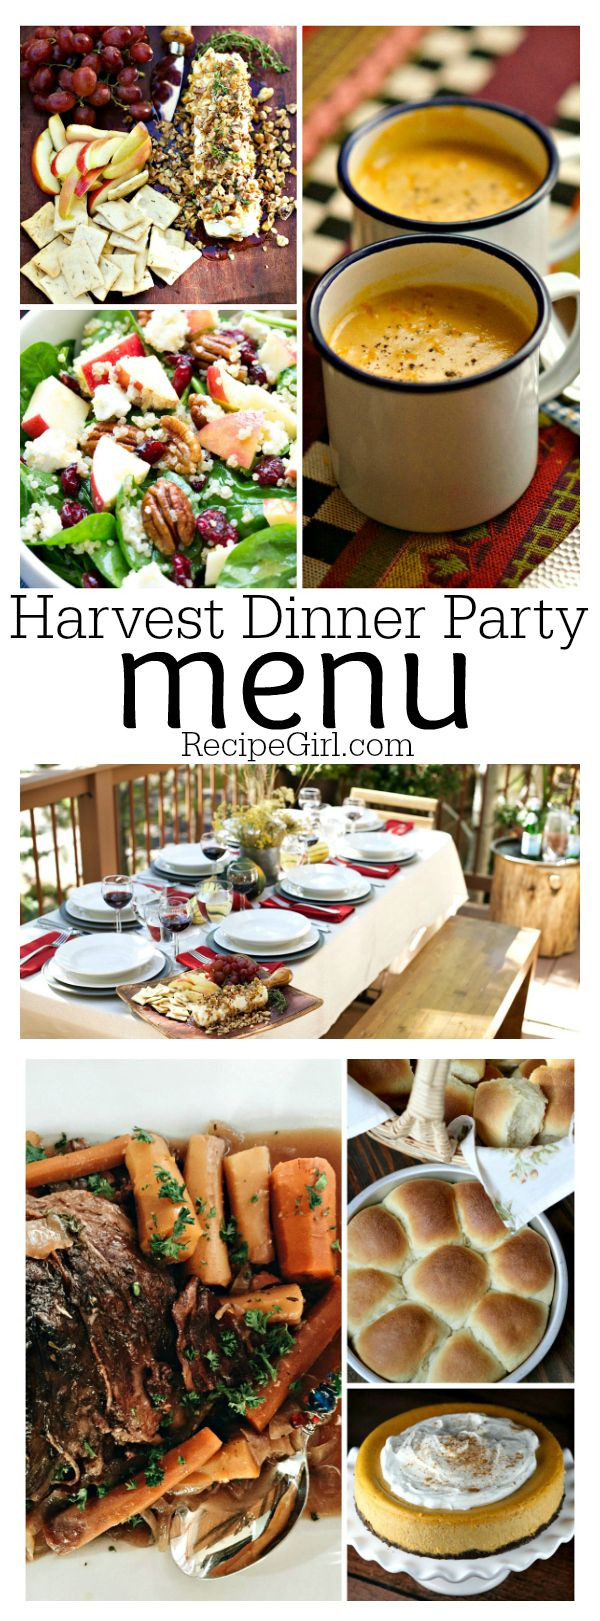 Fall Dinner Party Menu
 25 best ideas about Fall Dinner Parties on Pinterest